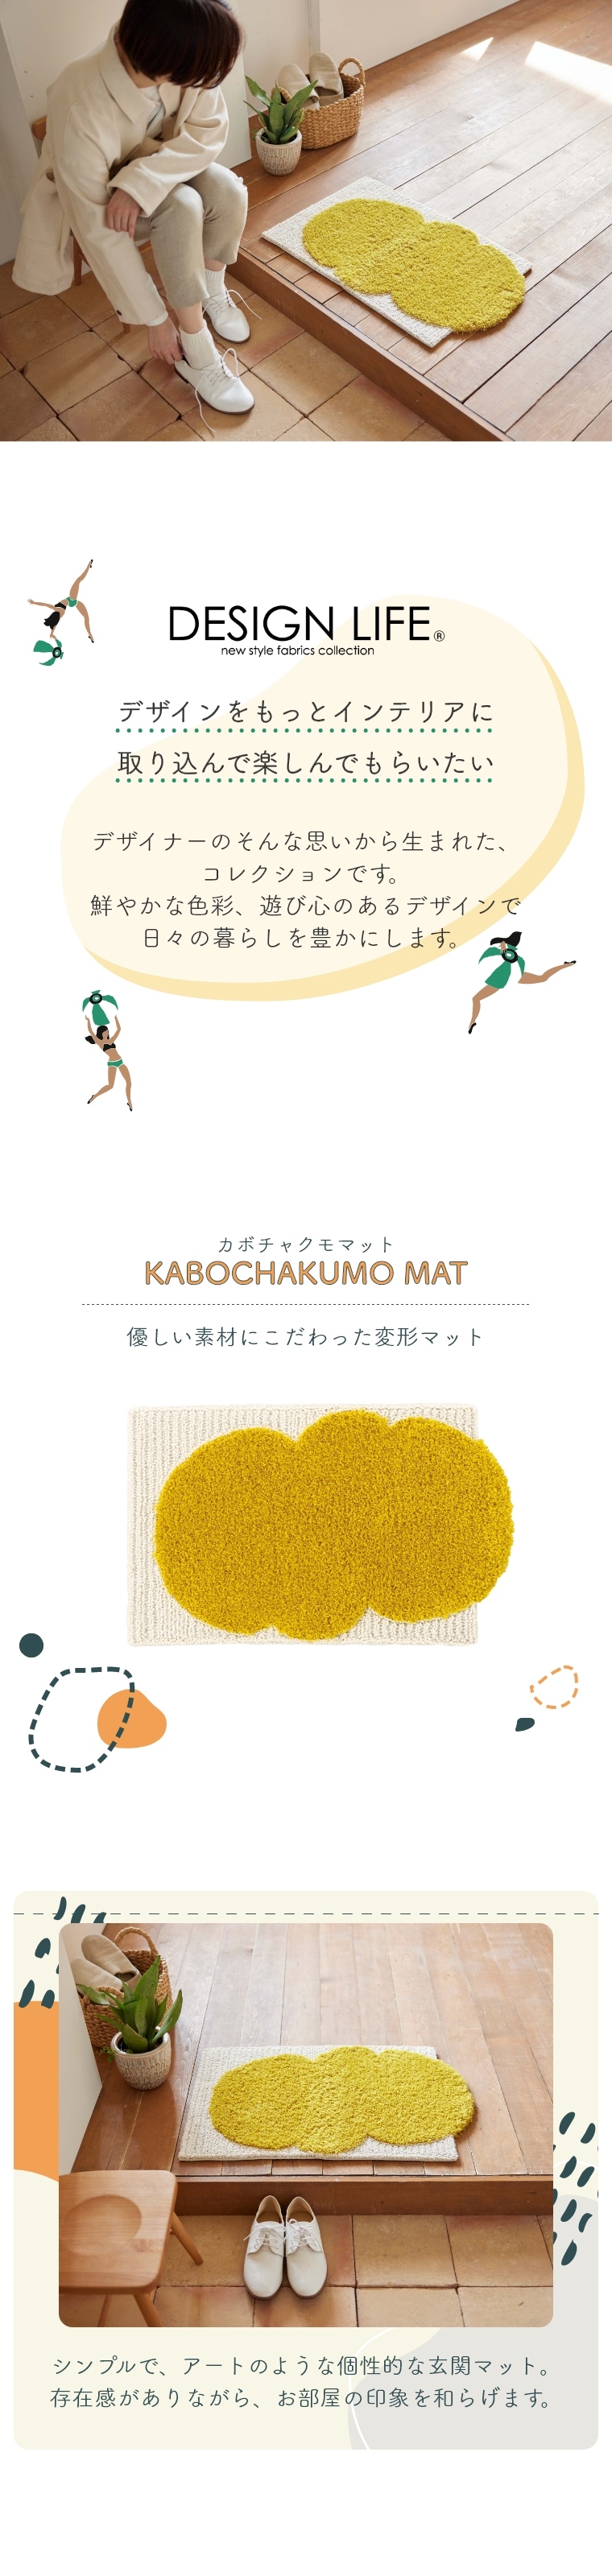 KABOCHAKUMO MAT カボチャクモマット 約45×70cm 143-01962